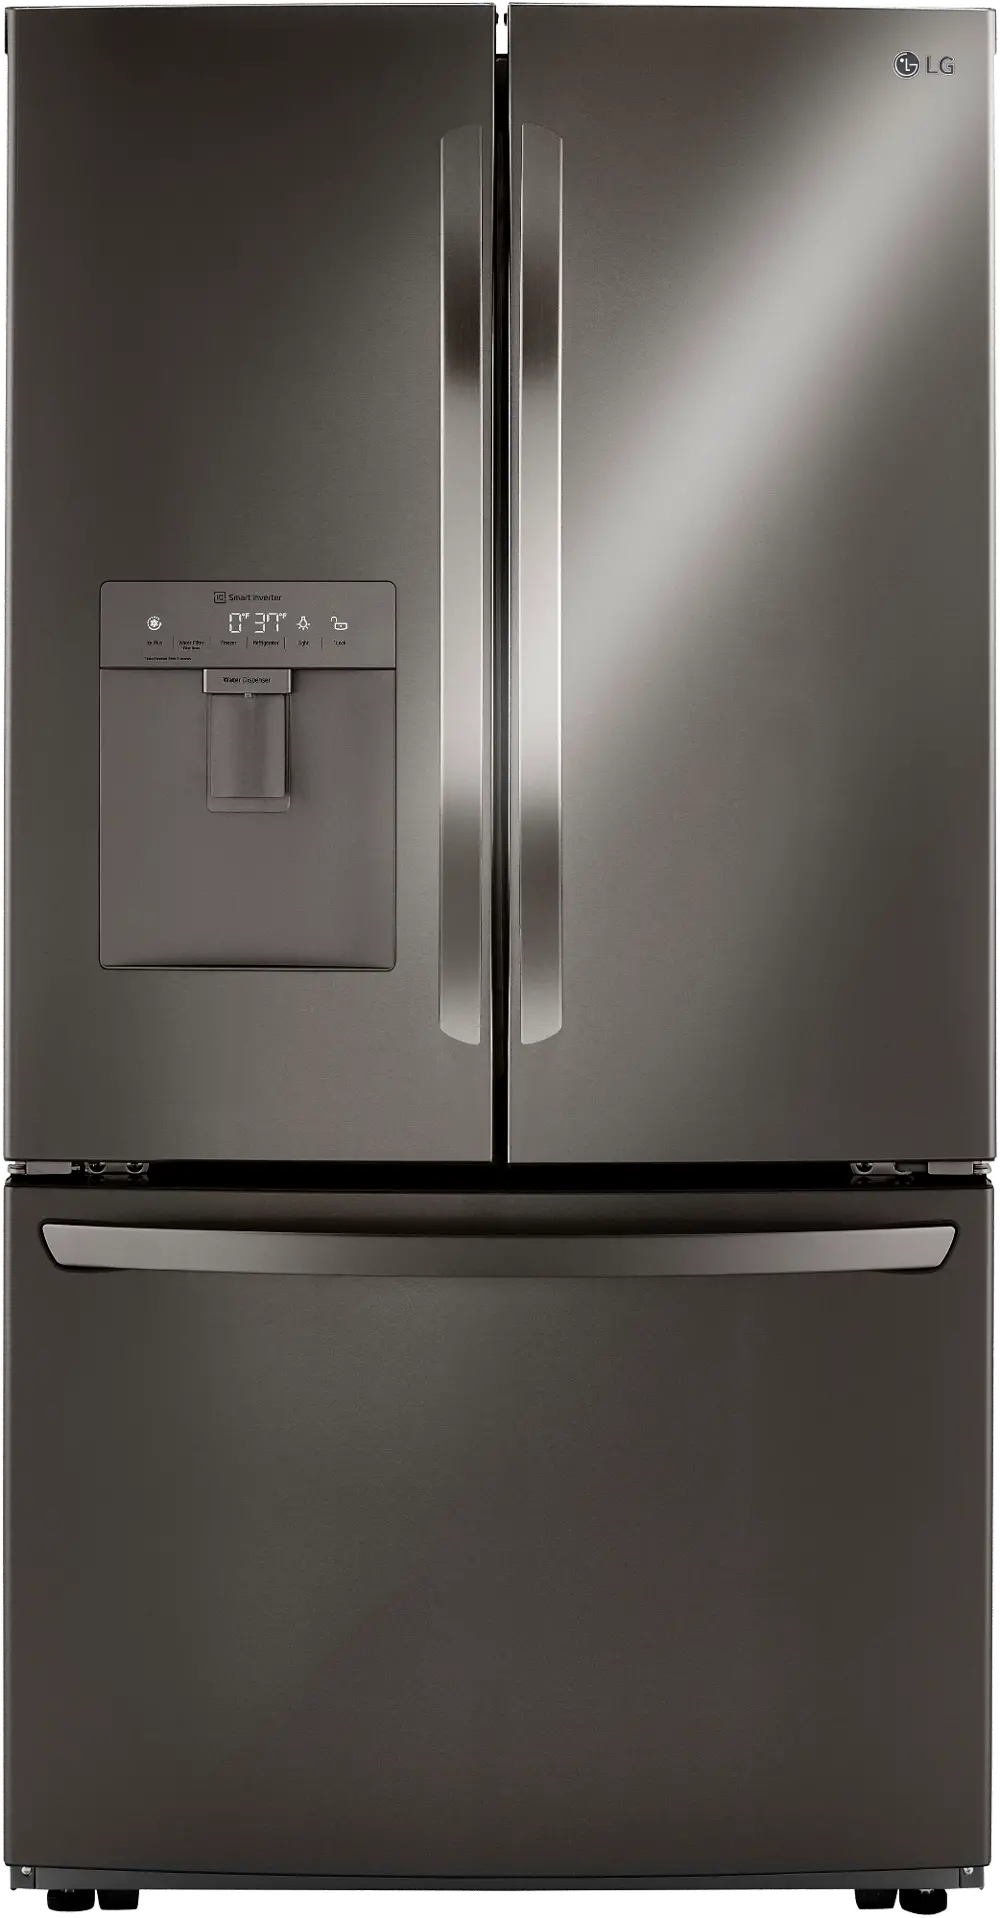 LRFWS2906D LG 29 cu ft French Door Refrigerator - Black Stainless Steel-1